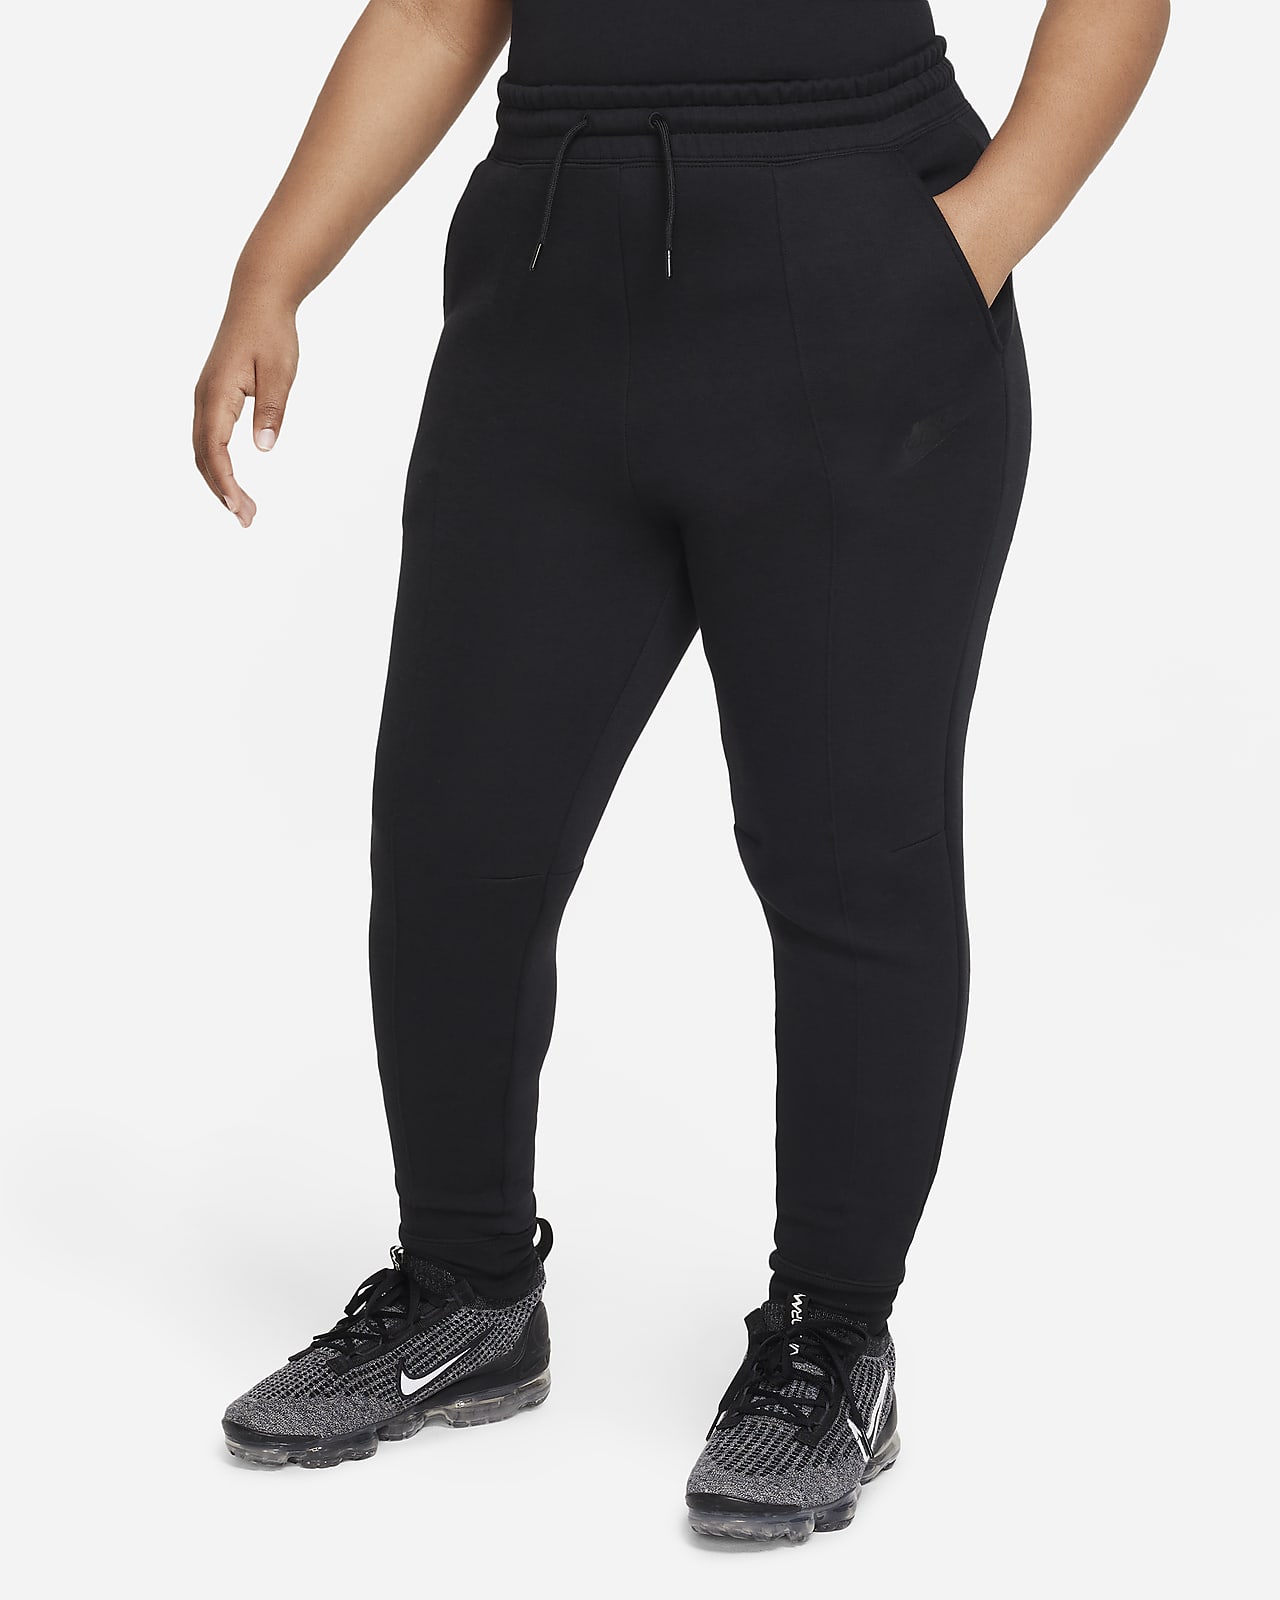 Pantaloni jogger Nike Sportswear Tech Fleece (Taglia grande) – Ragazza